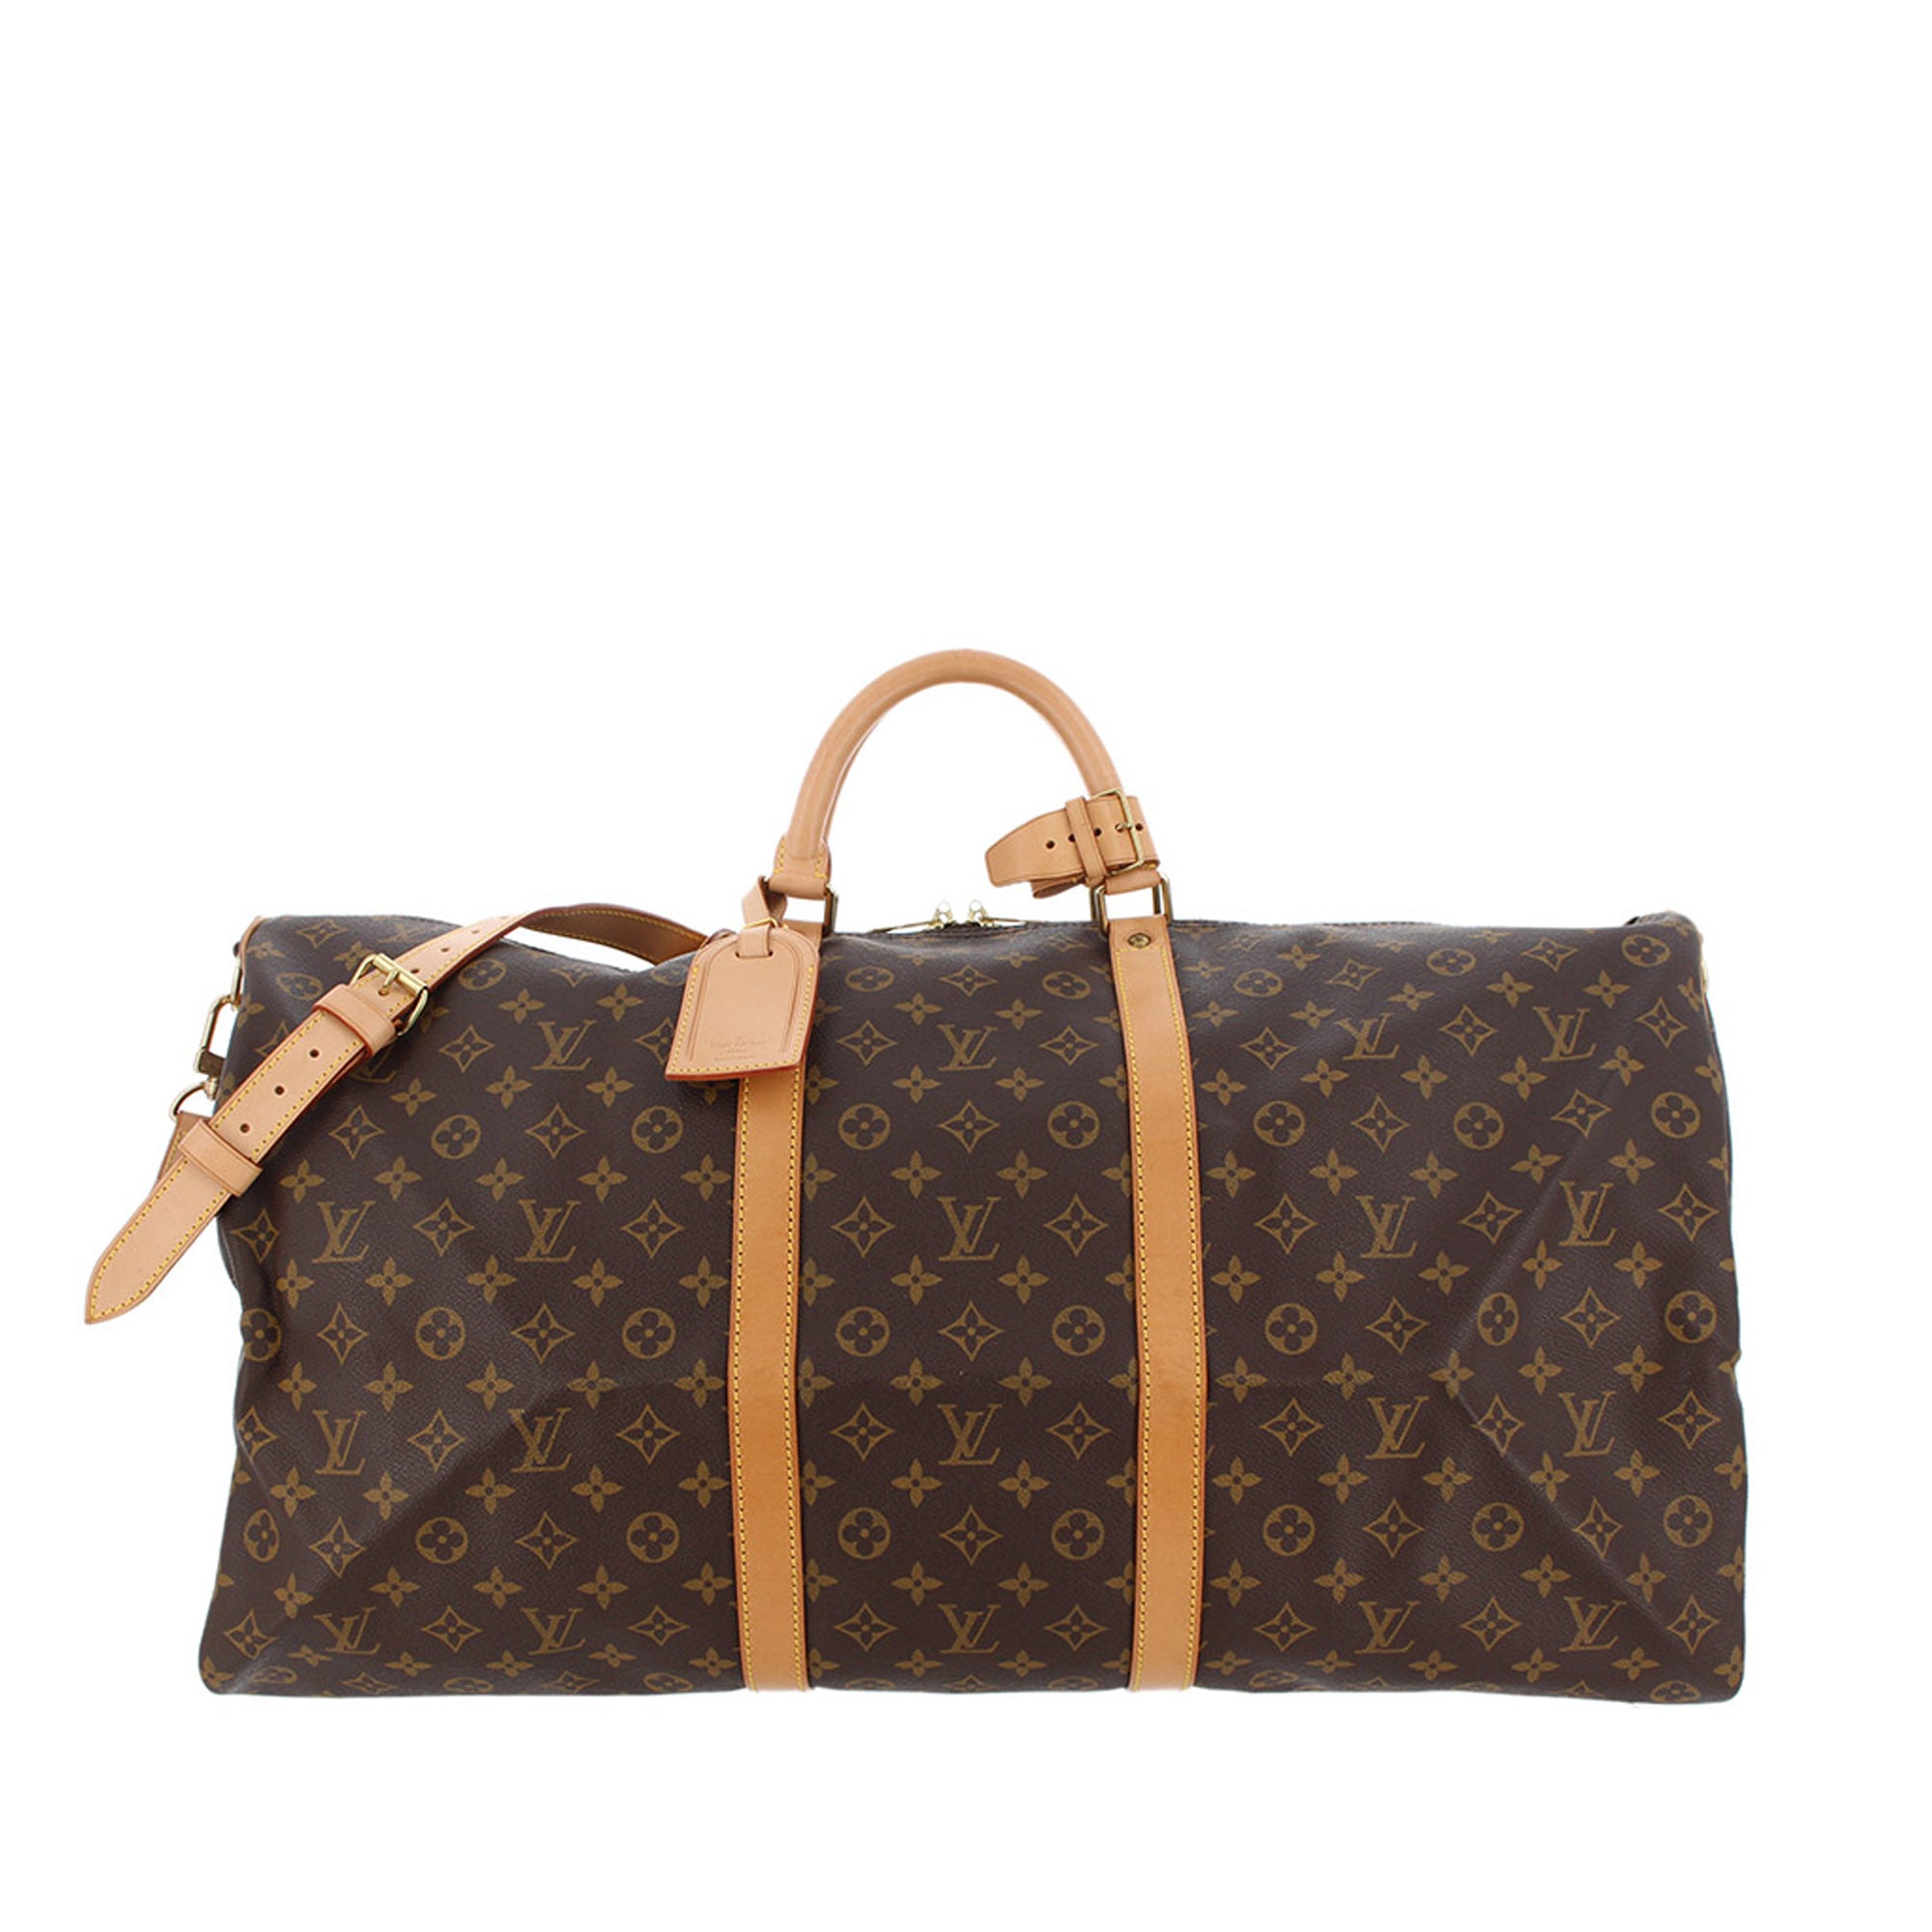 Louis Vuitton lv Chapman Brothers Messenger Bag